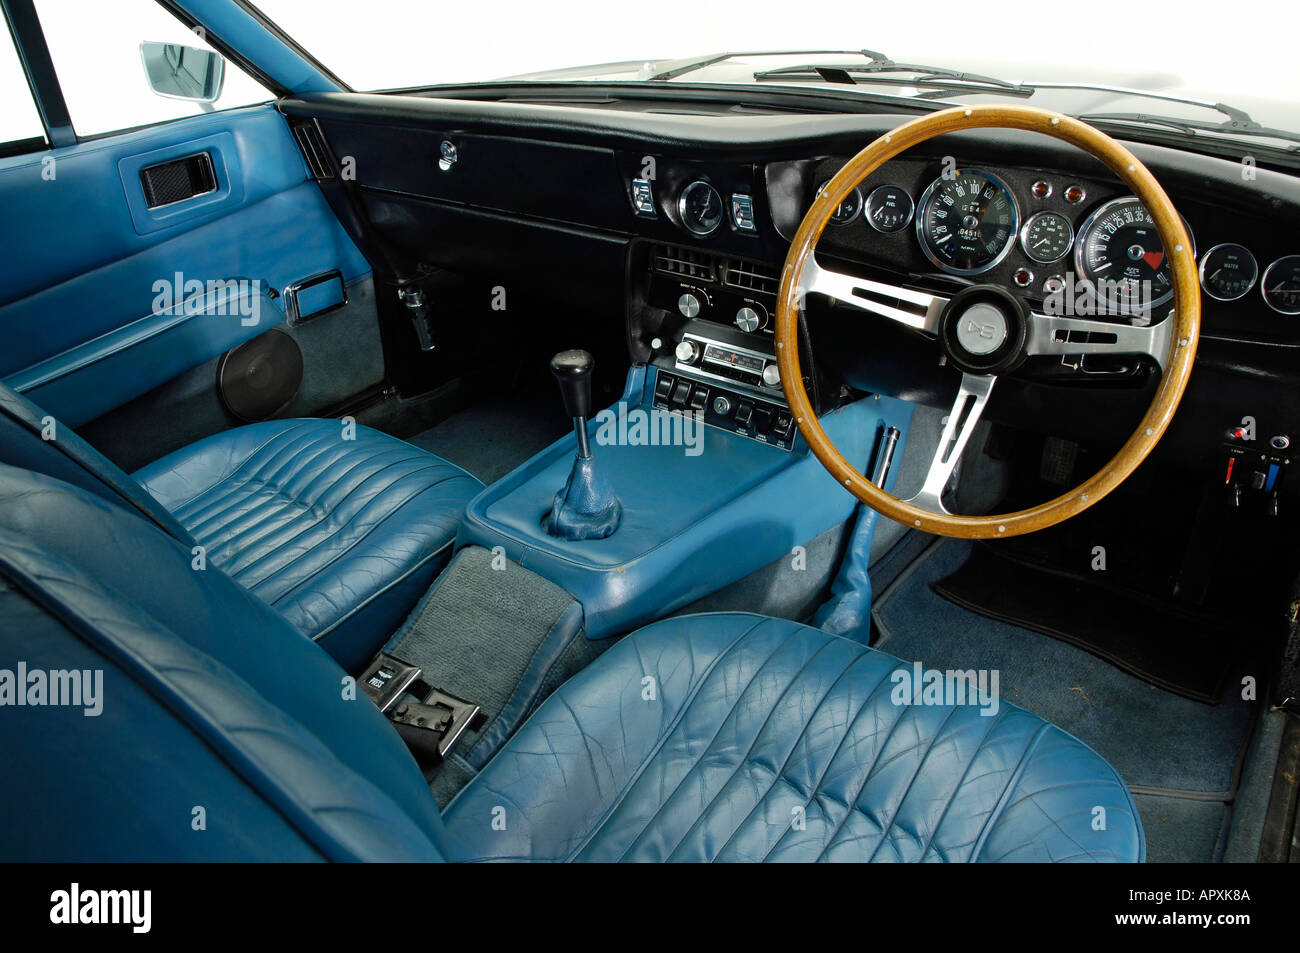 1970-Aston Martin DBS V8 Stockfotografie - Alamy